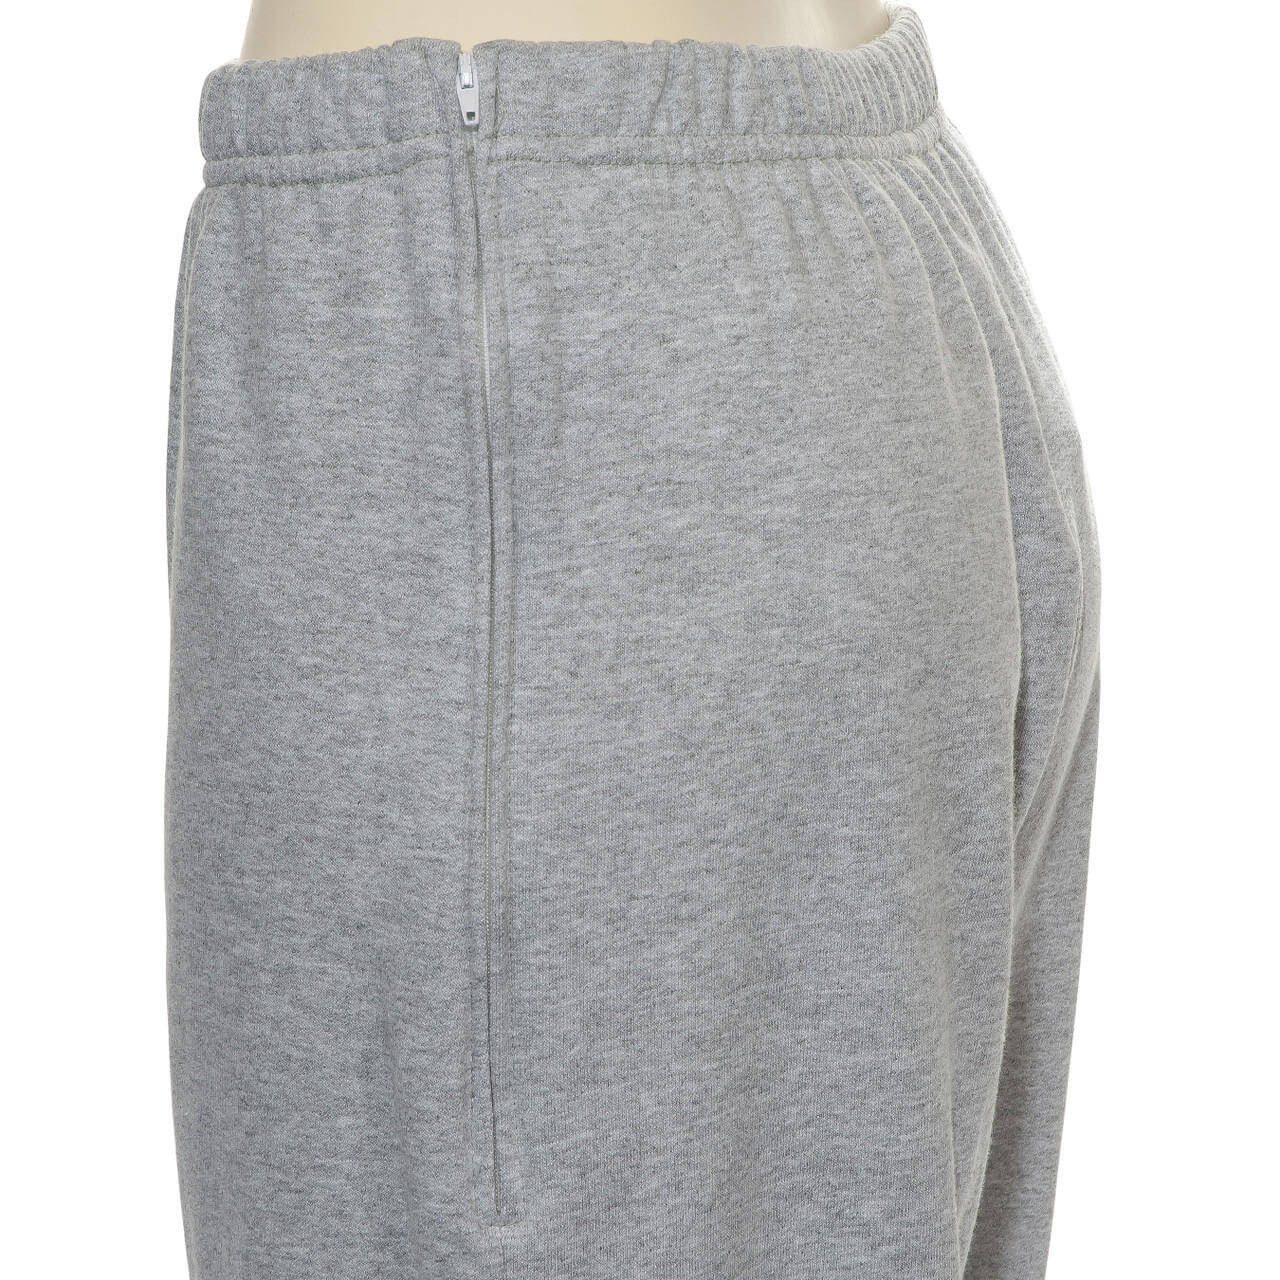 Grey Sweatpants for Tall Women: Fleece Open Bottom Pants  Tall women,  Womens elastic waist pants, Leggings are not pants